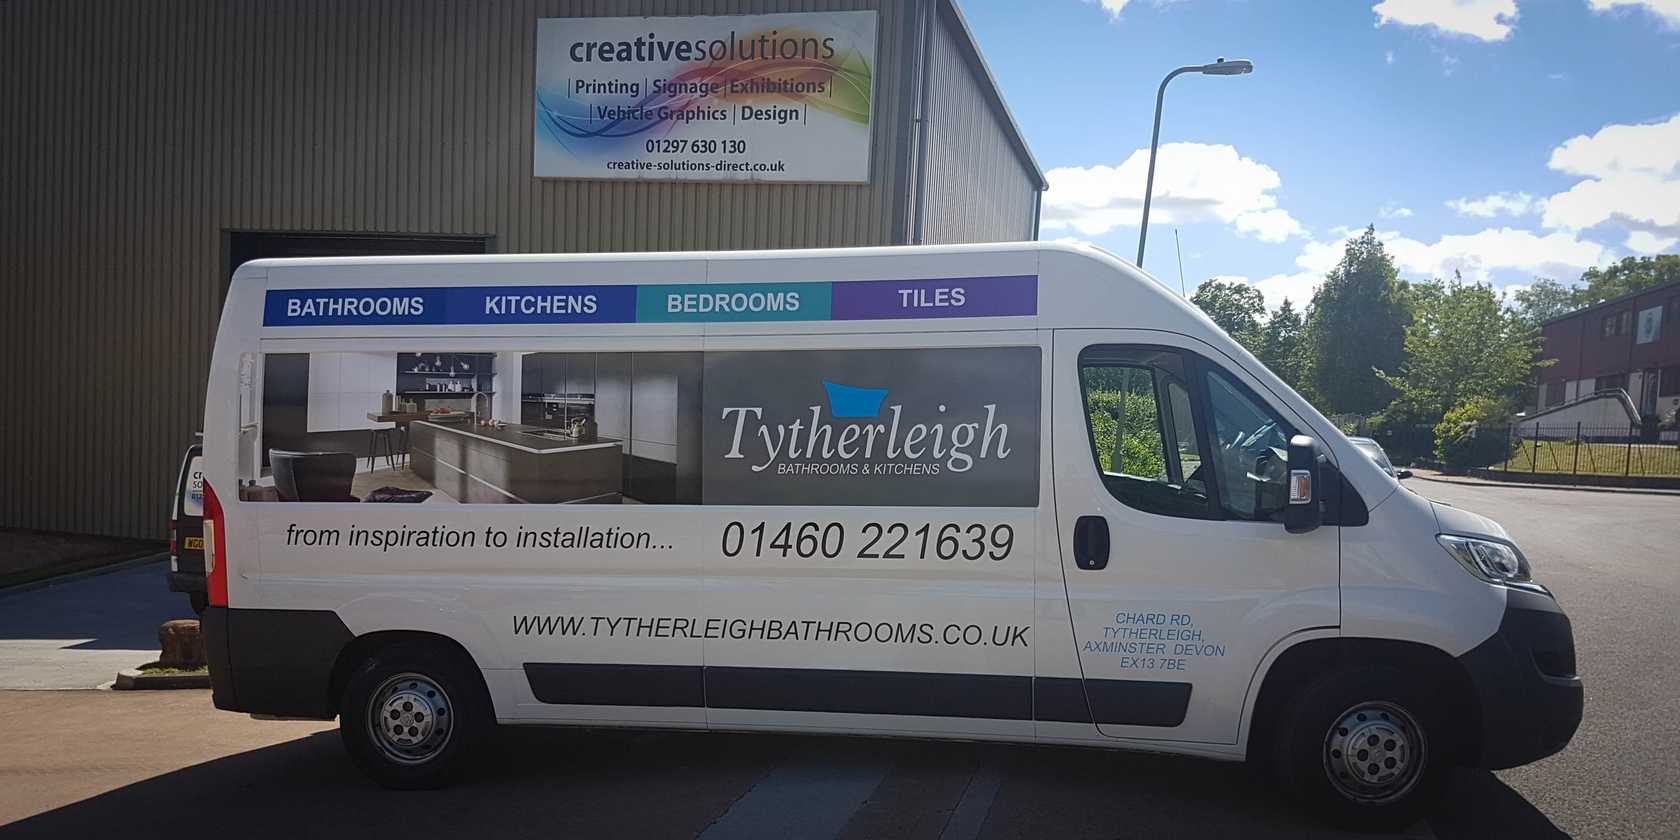 Tytherleigh Bathrooms Vehicle Graphics